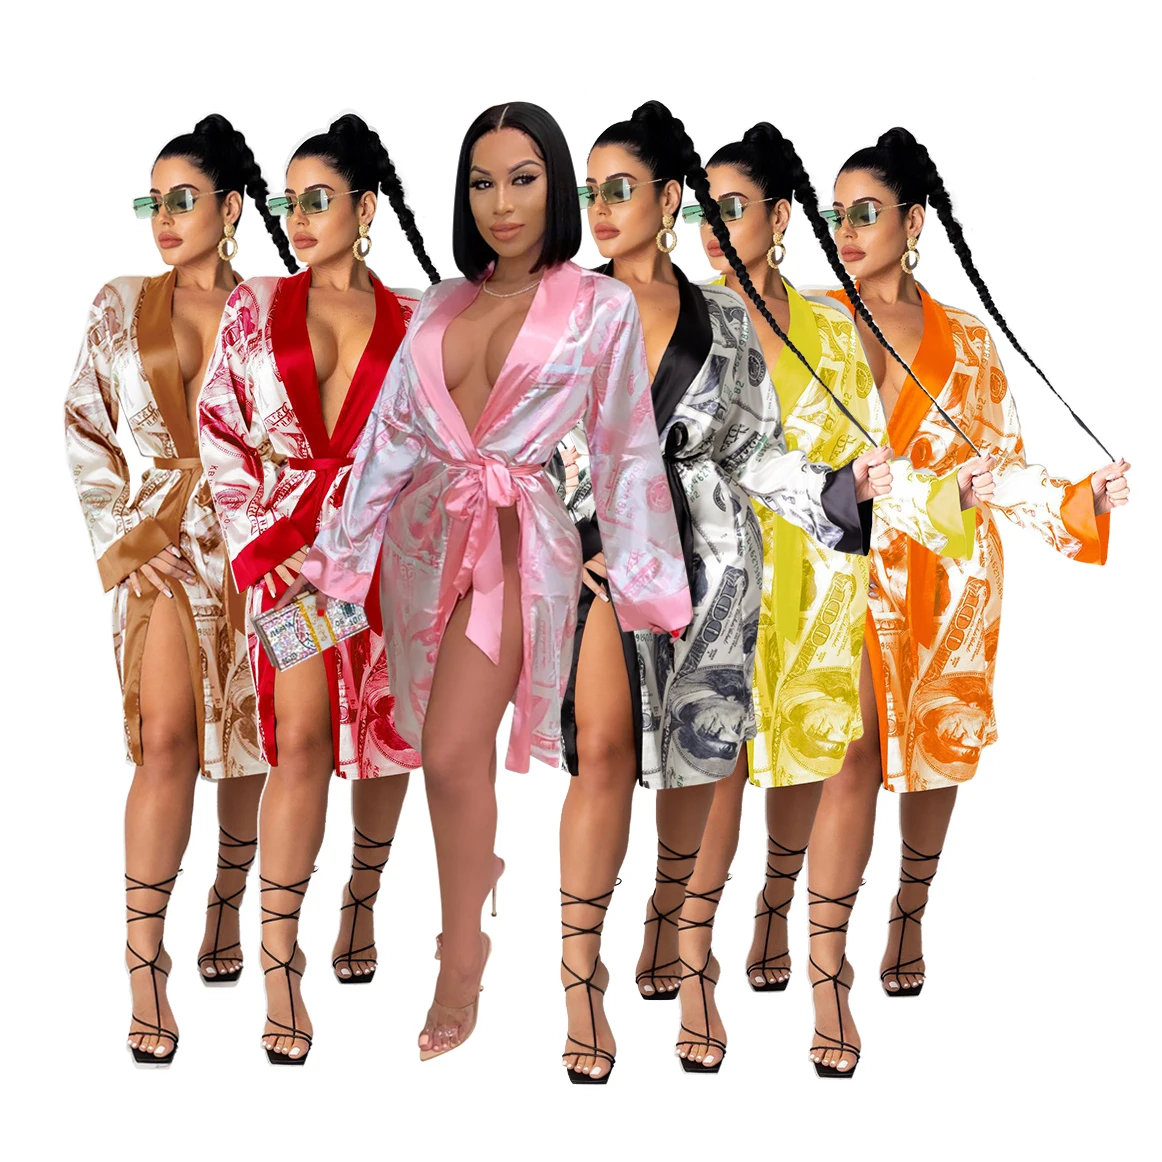 

2021 spring satin silk pajamas women sexy nightclothes nightgown ladies sleepwear gown dollar money robe pajamas for women, As picture or customized make